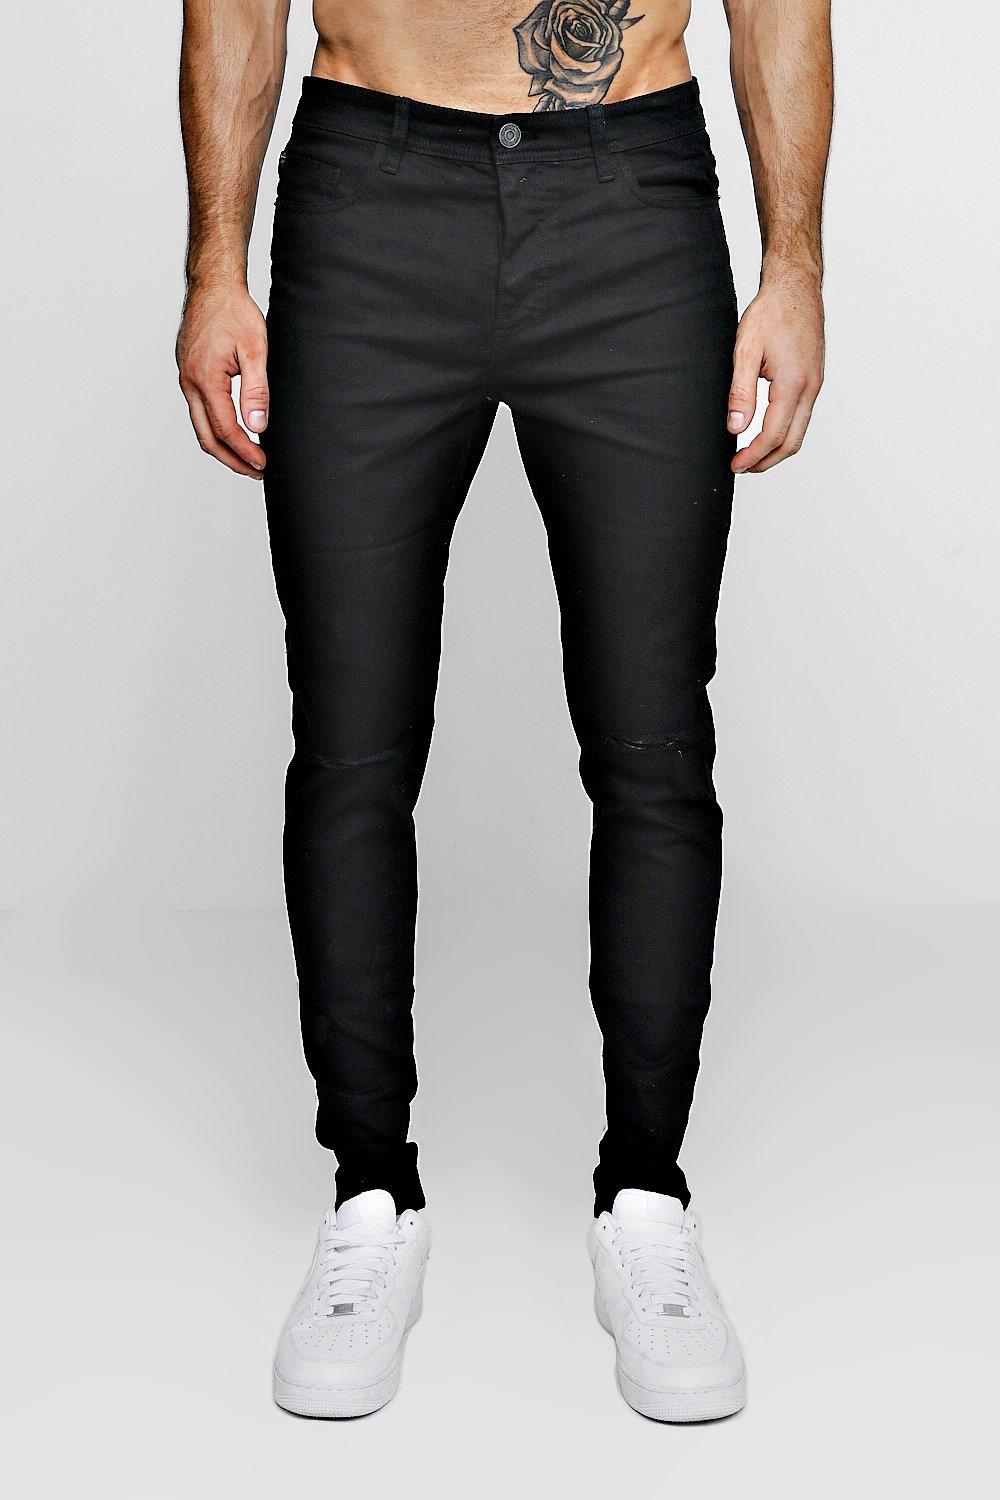 Men's Black Stretch Skinny Jeans With 